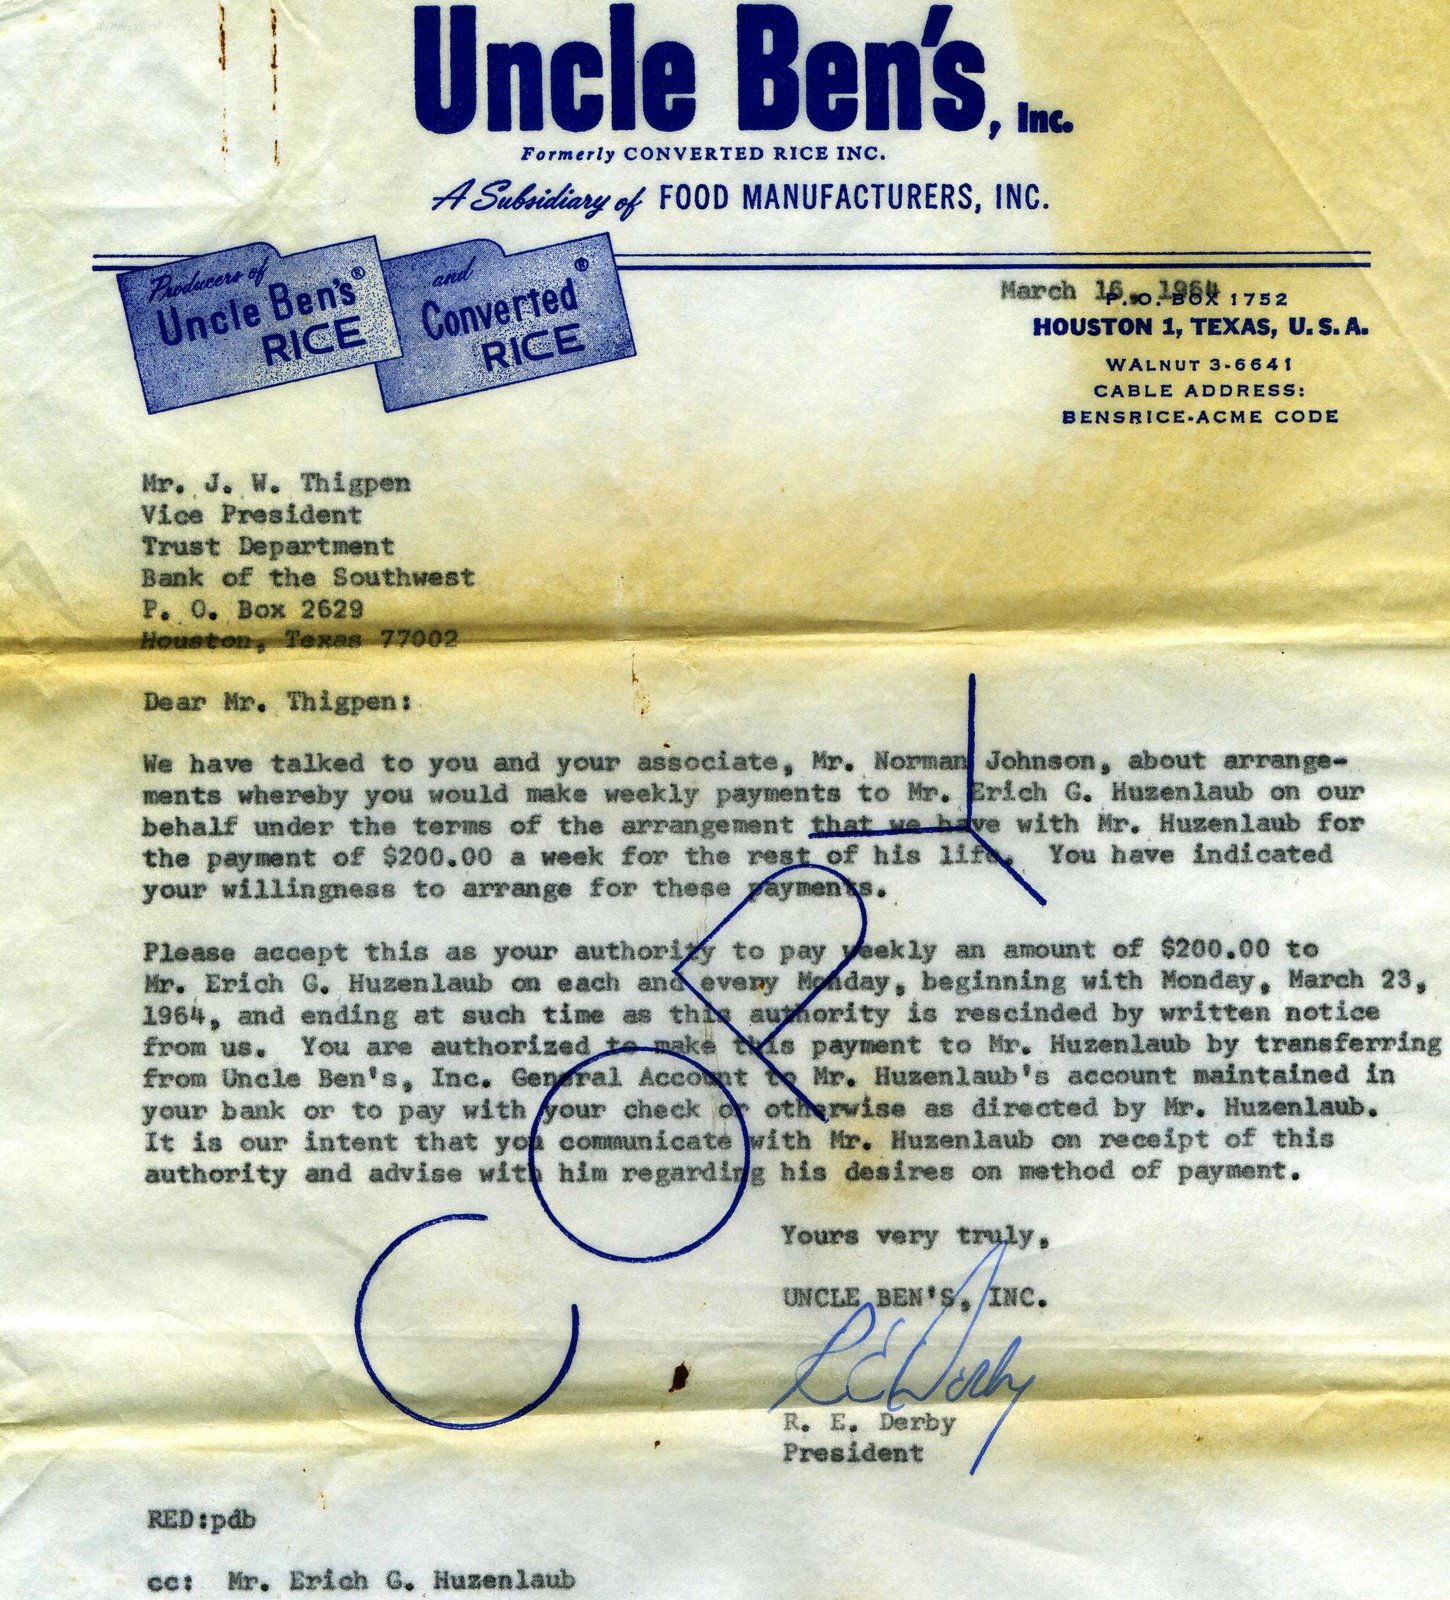 [Uncle+Bens+RE+Derby+Letter+15+March+1964.jpg]